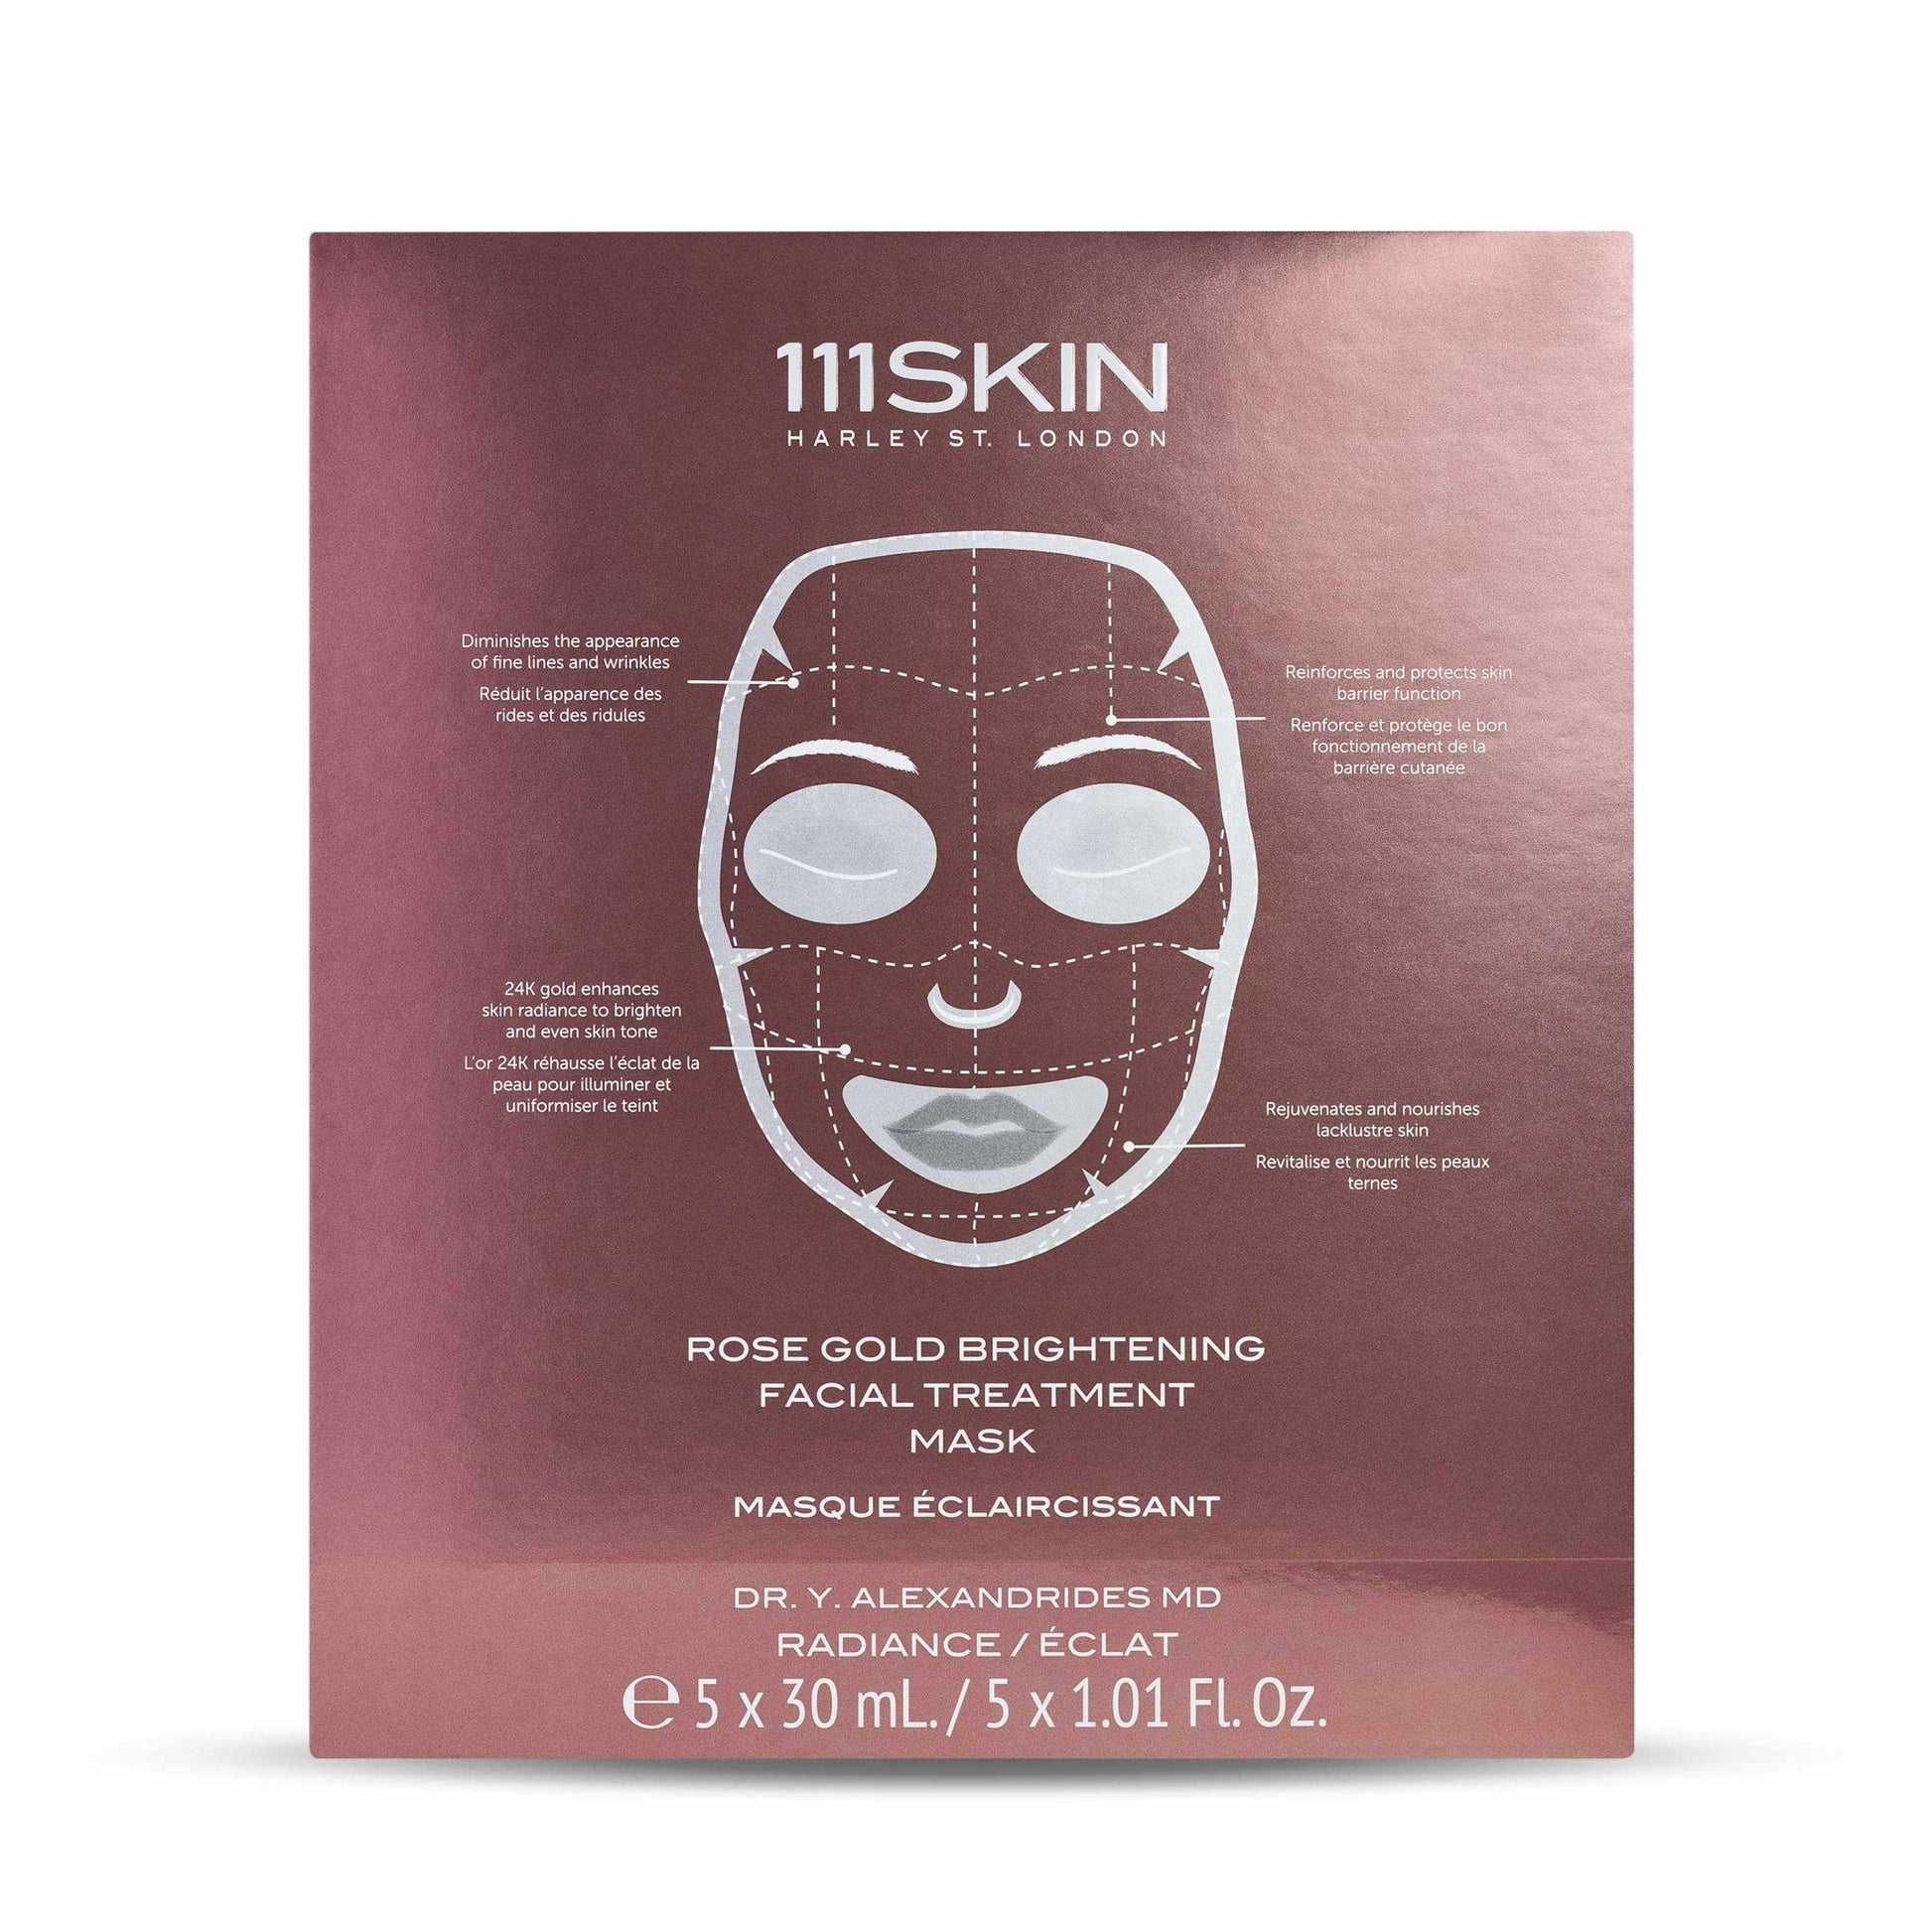 Rose Gold Brightening Facial Treatment Mask - 111SKIN UK